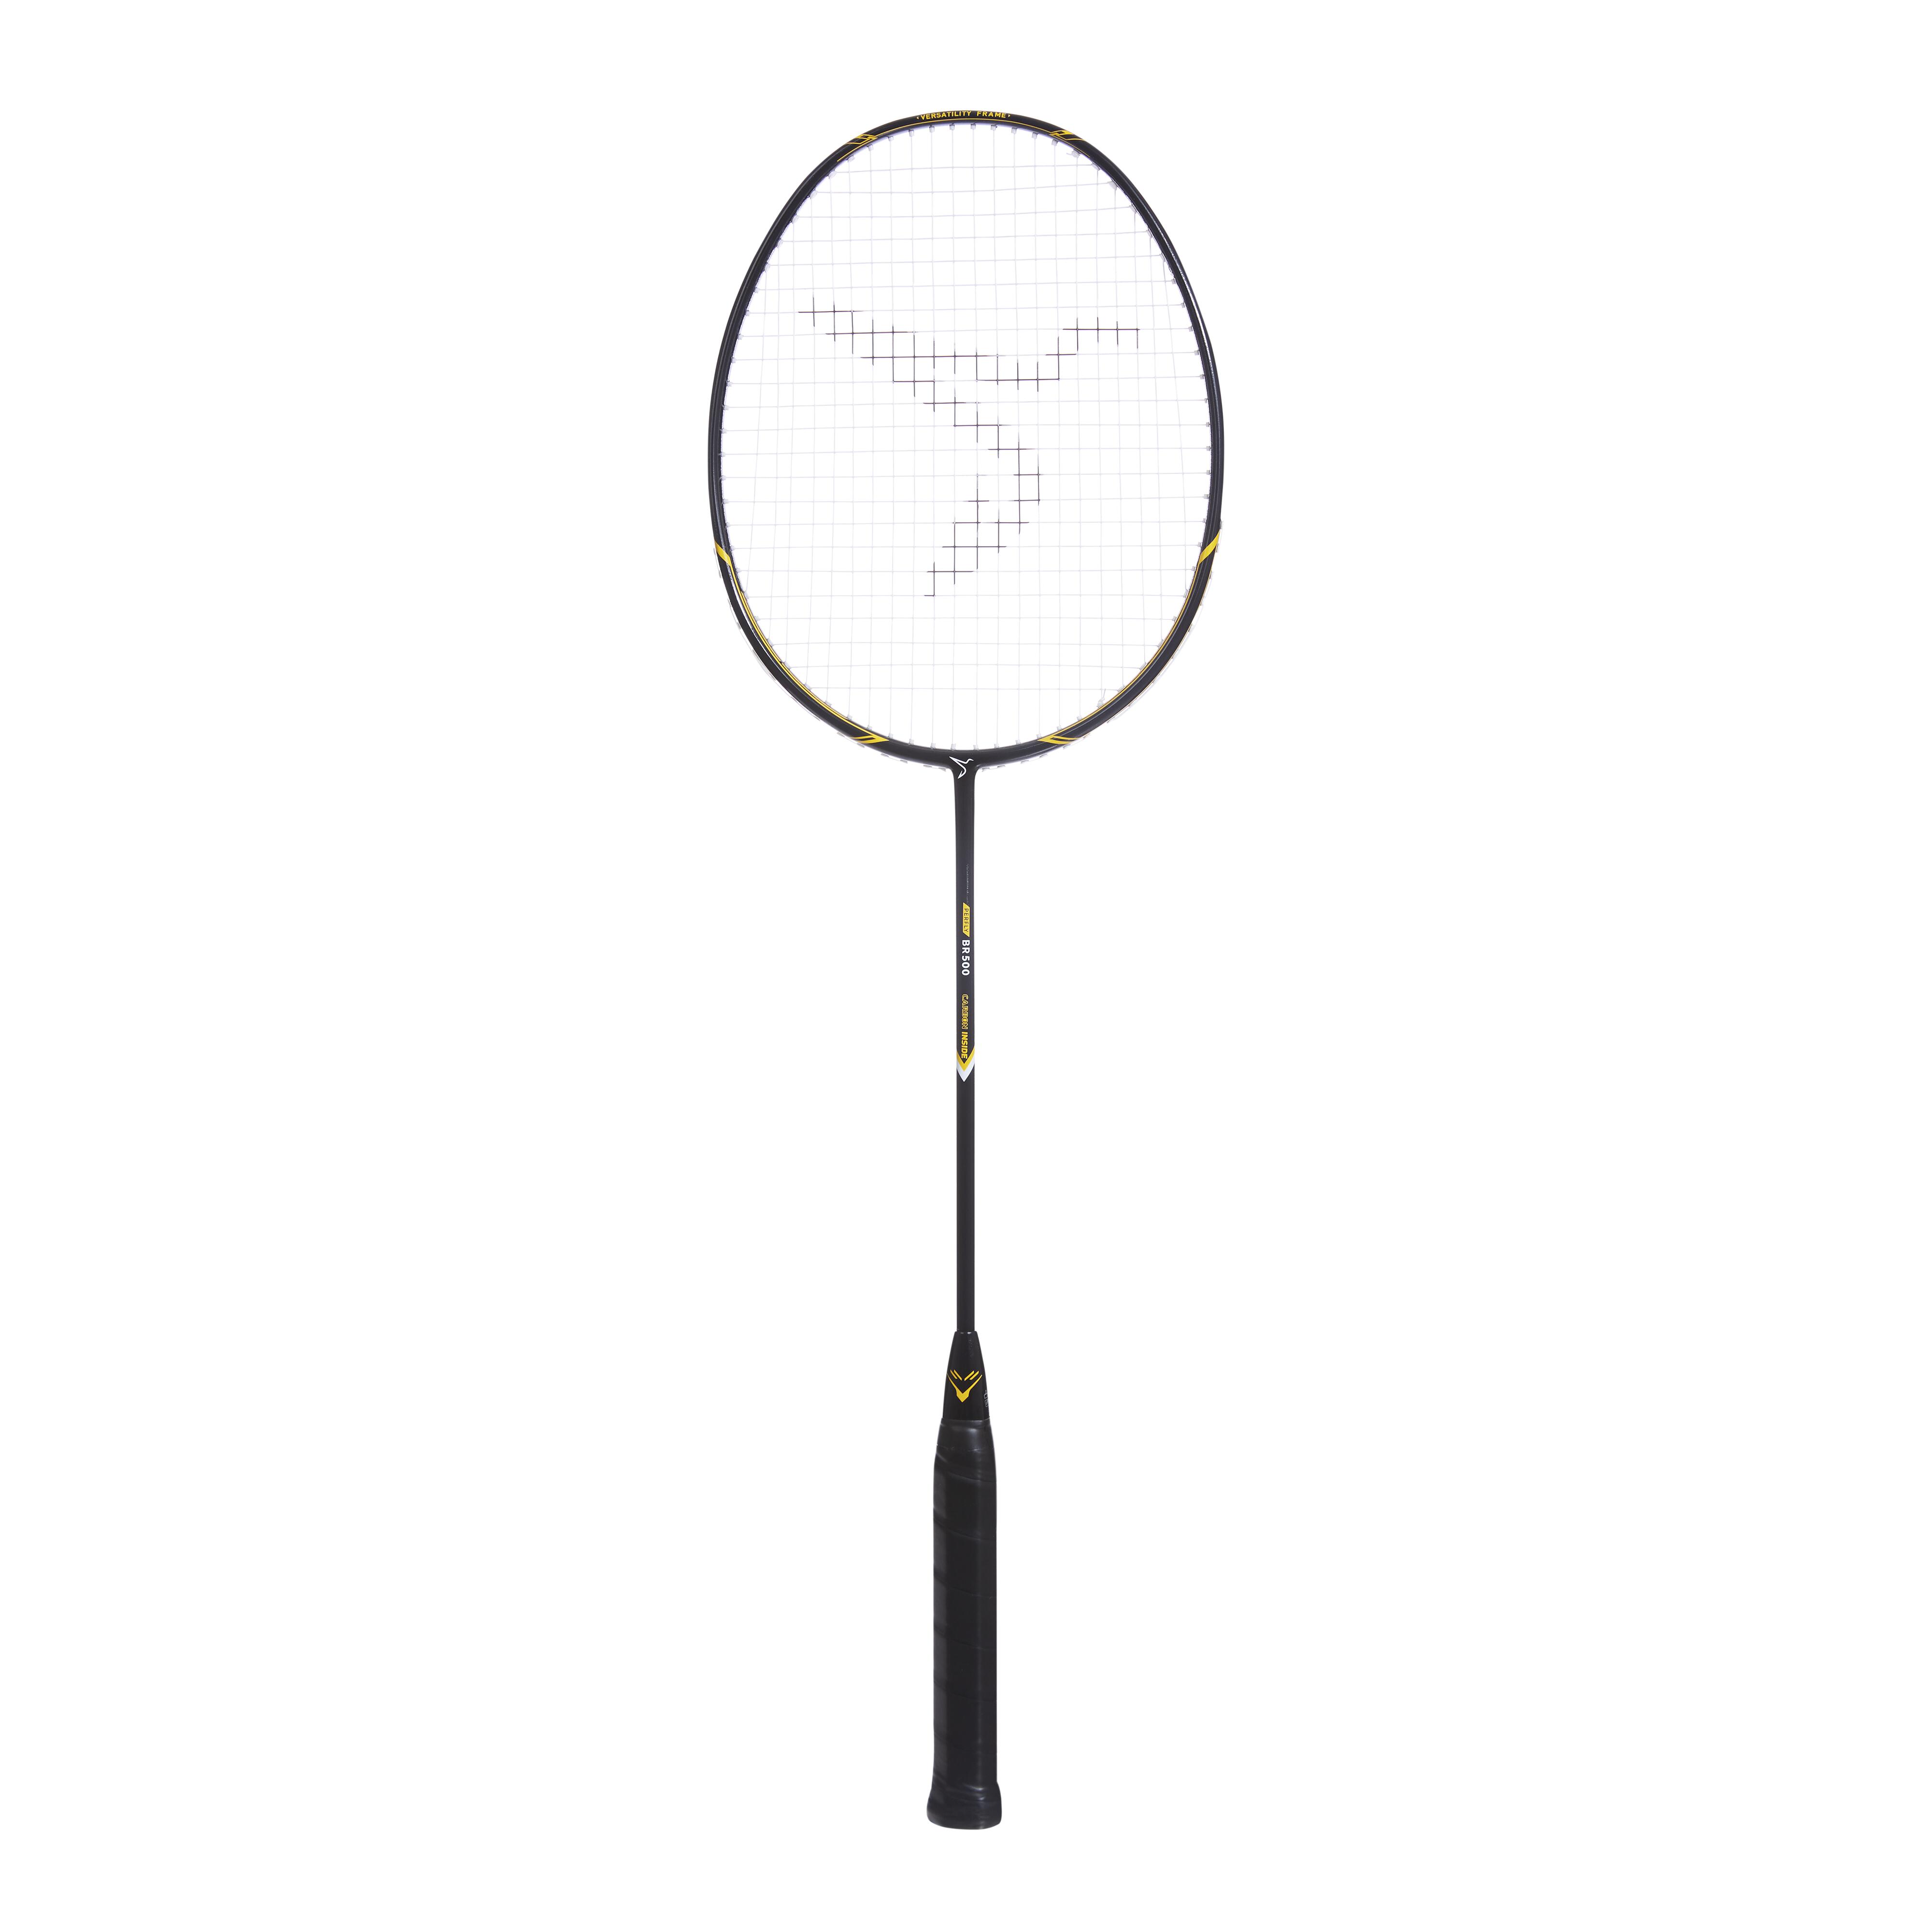 https://contents.mediadecathlon.com/p2388573/k$d04c5765fb16707b319dc631ee561000/adult-badminton-racket-br-500-black-yellow-perfly-8513986.jpg